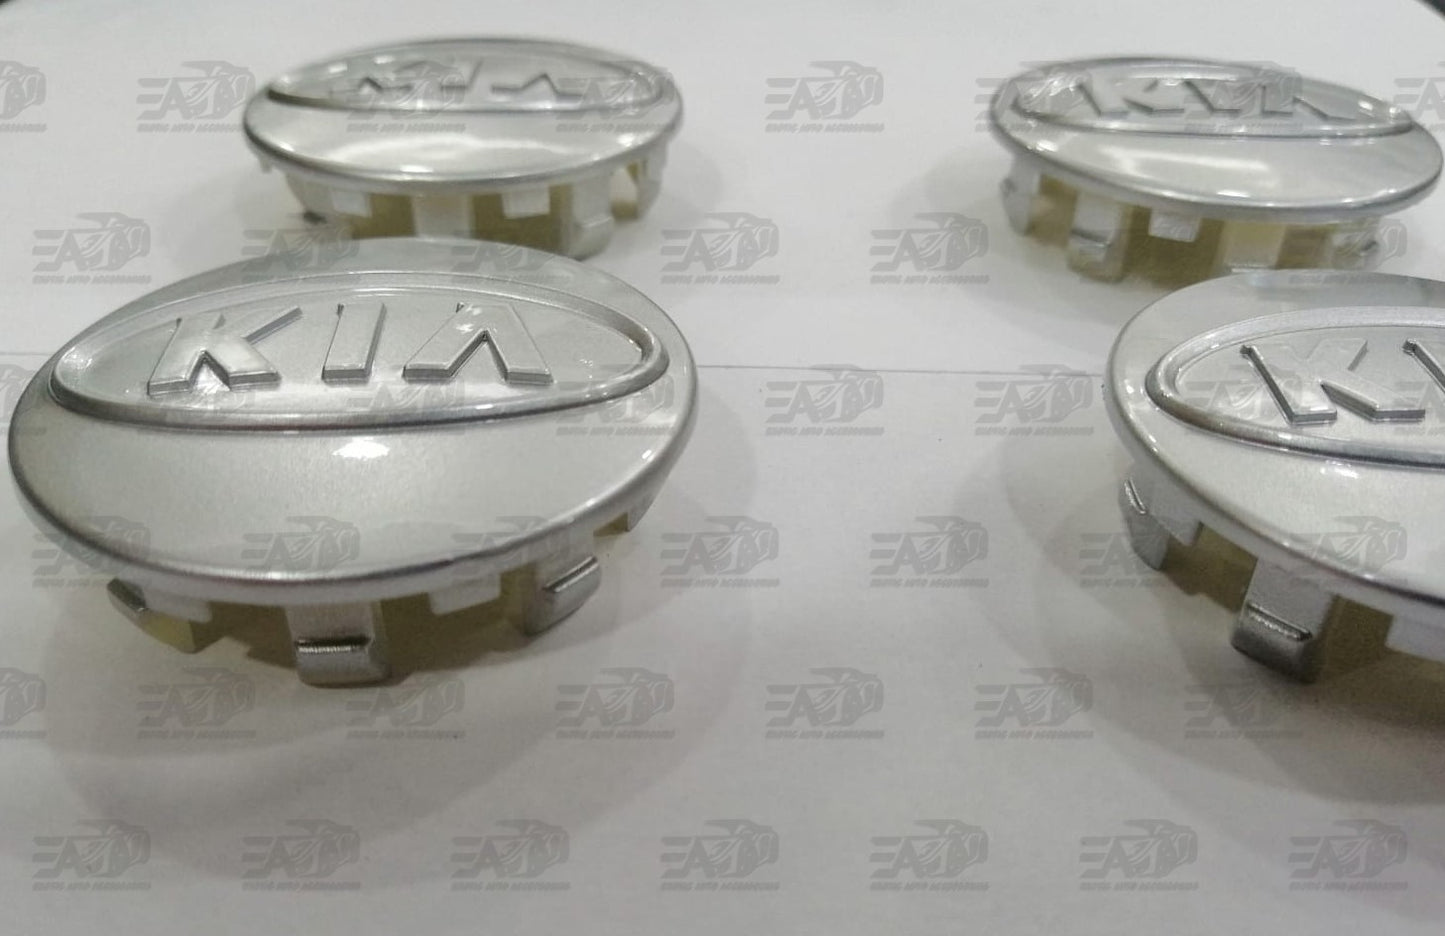 Kia silver center caps set 58mm